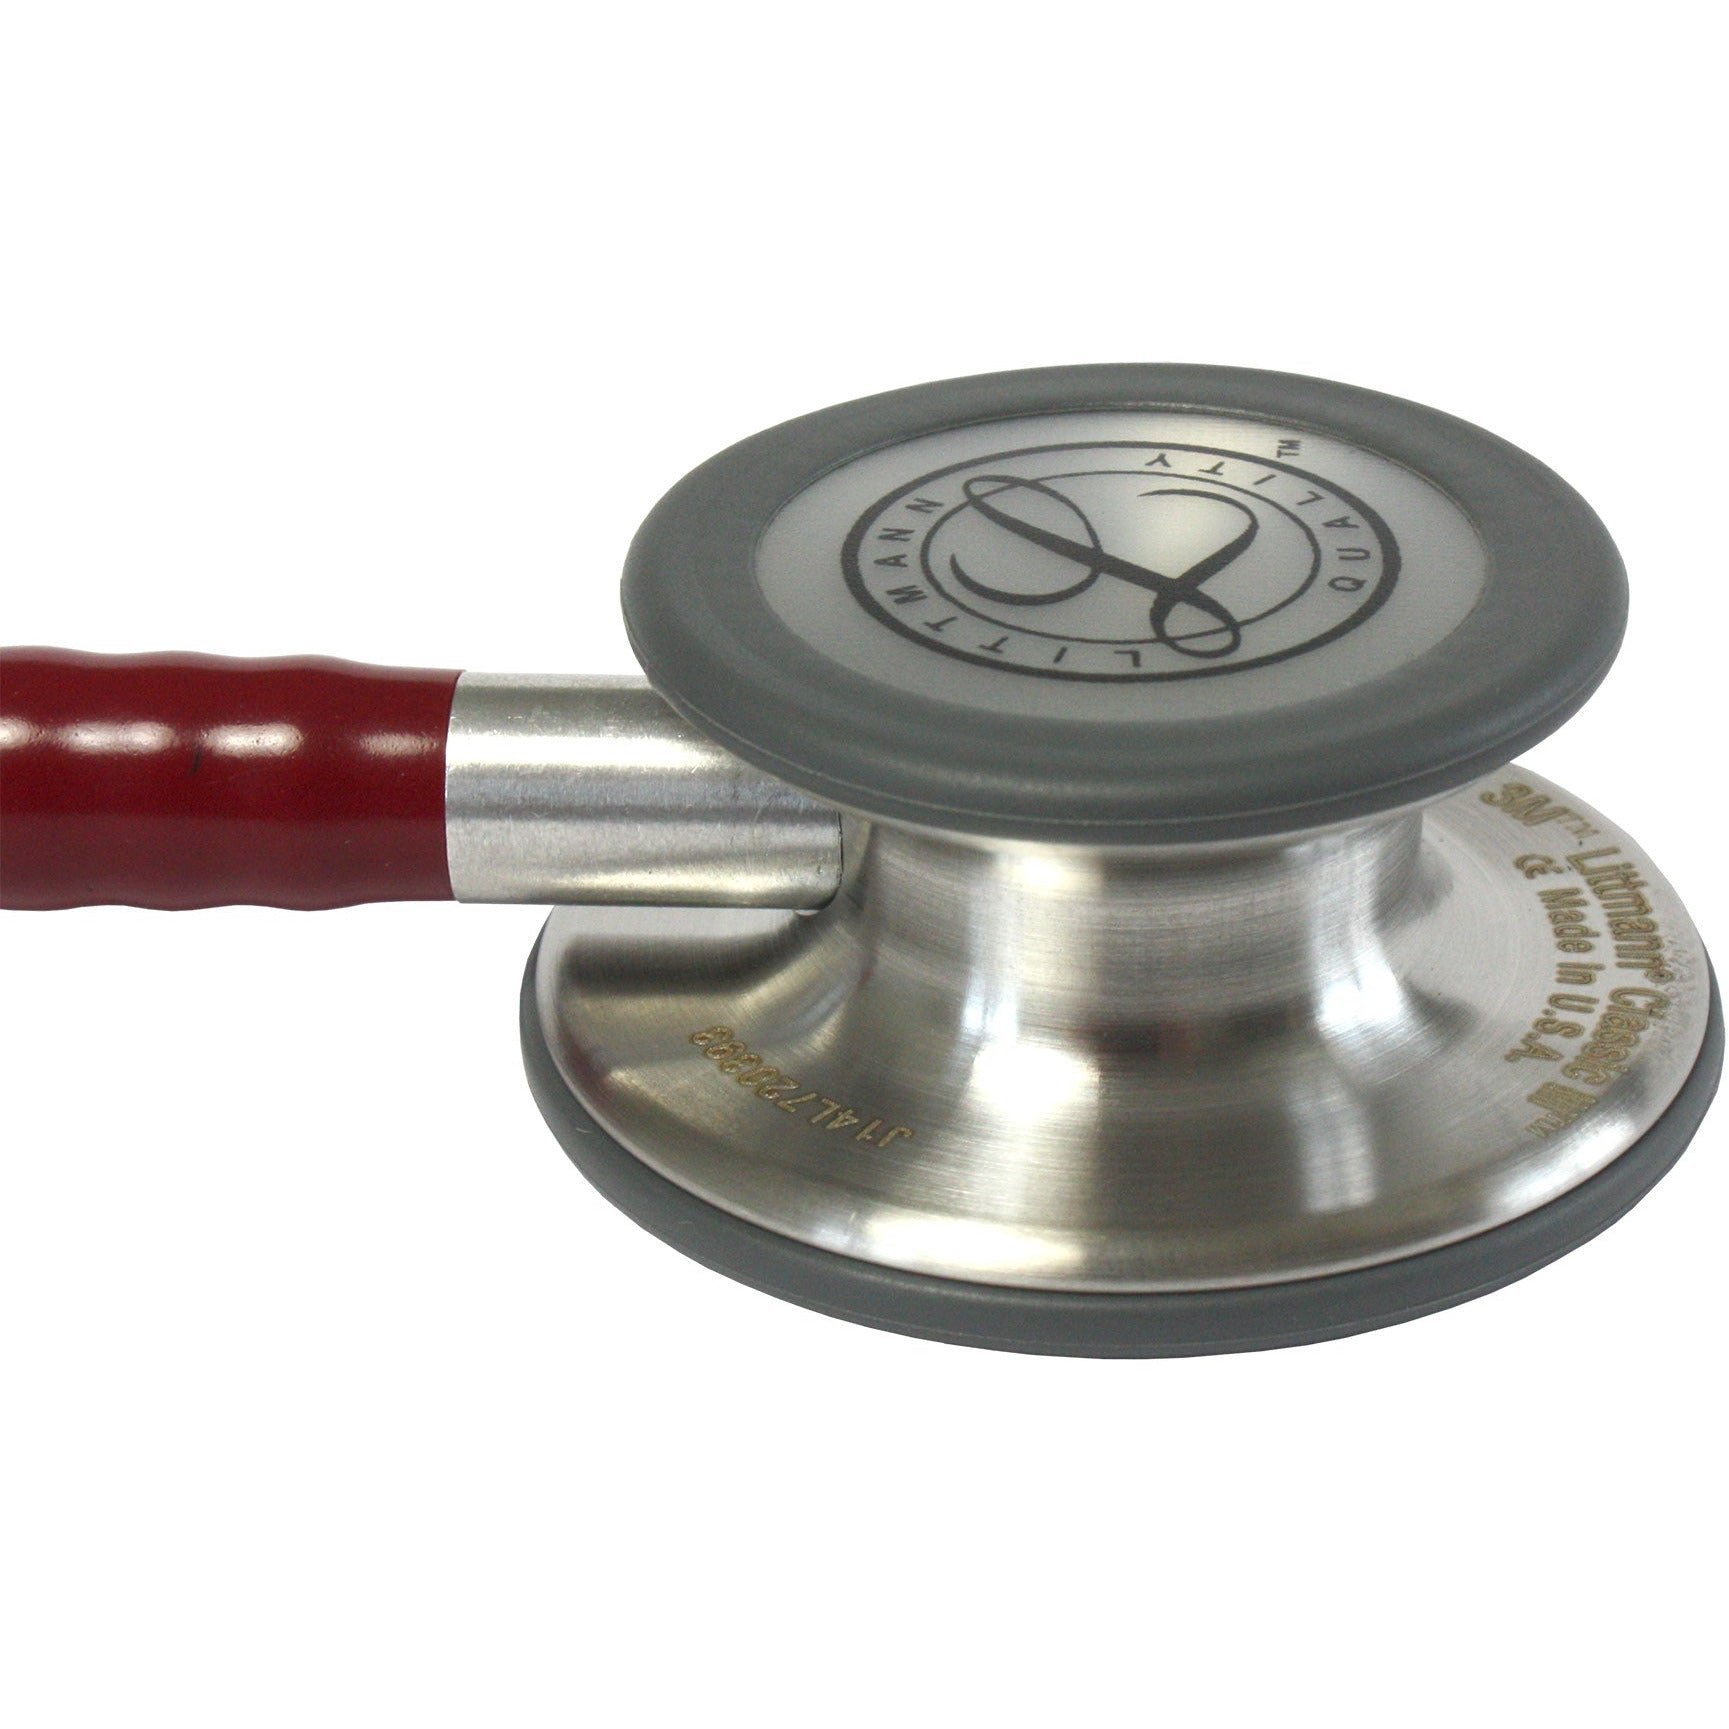 Littmann Classic III Stethoscope: Burgundy 5627 - Student Deal 3M Littmann